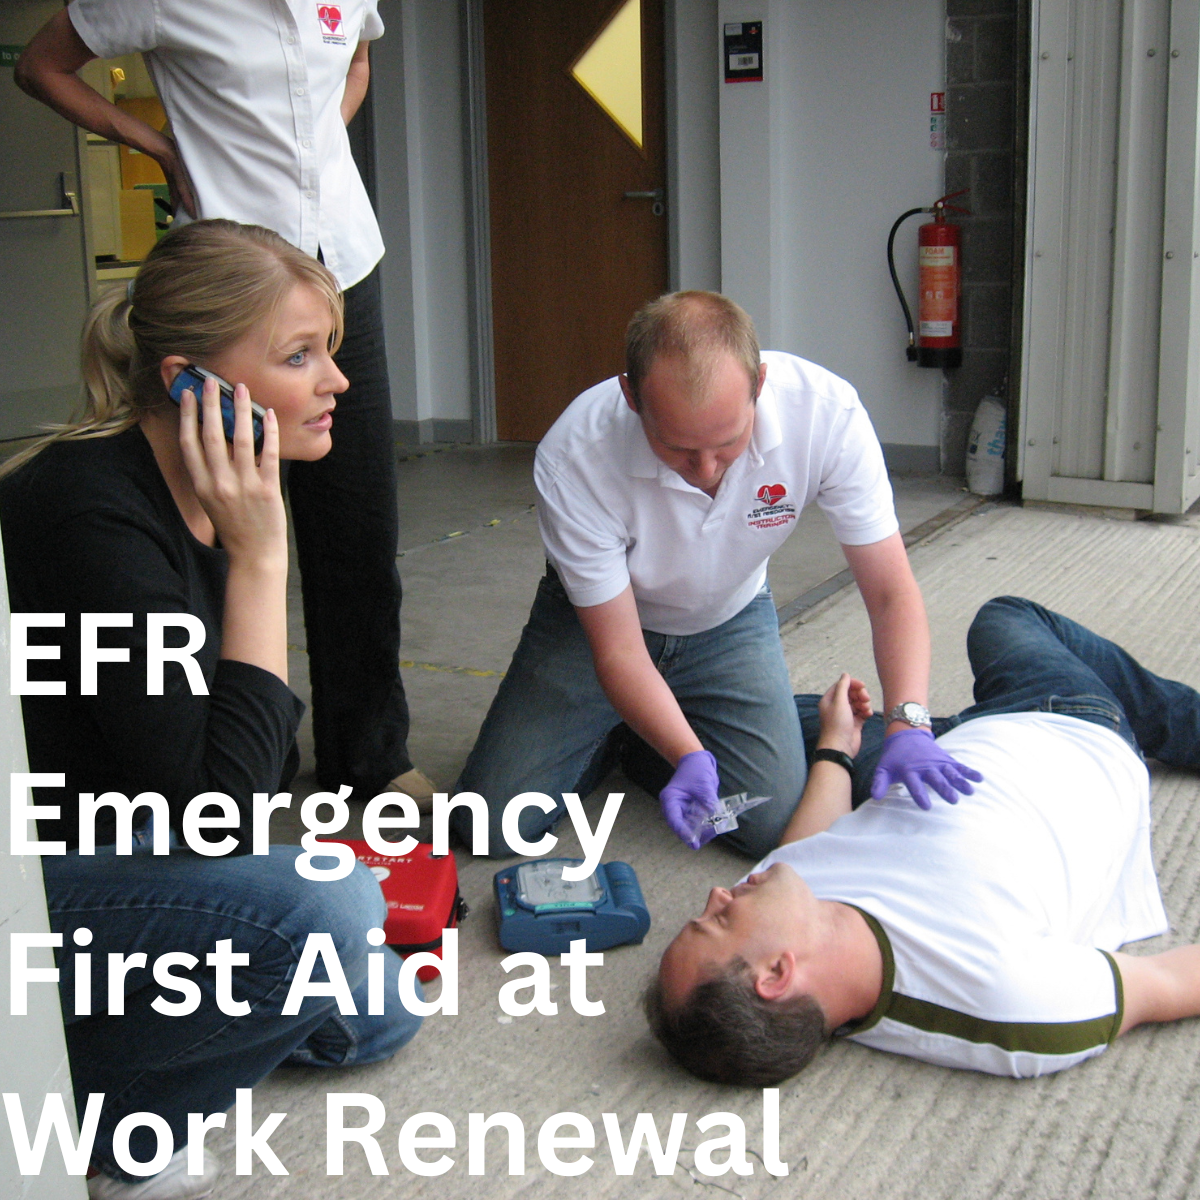 EFR EMRGENCY FIRST AID AT WORK RENEWAL